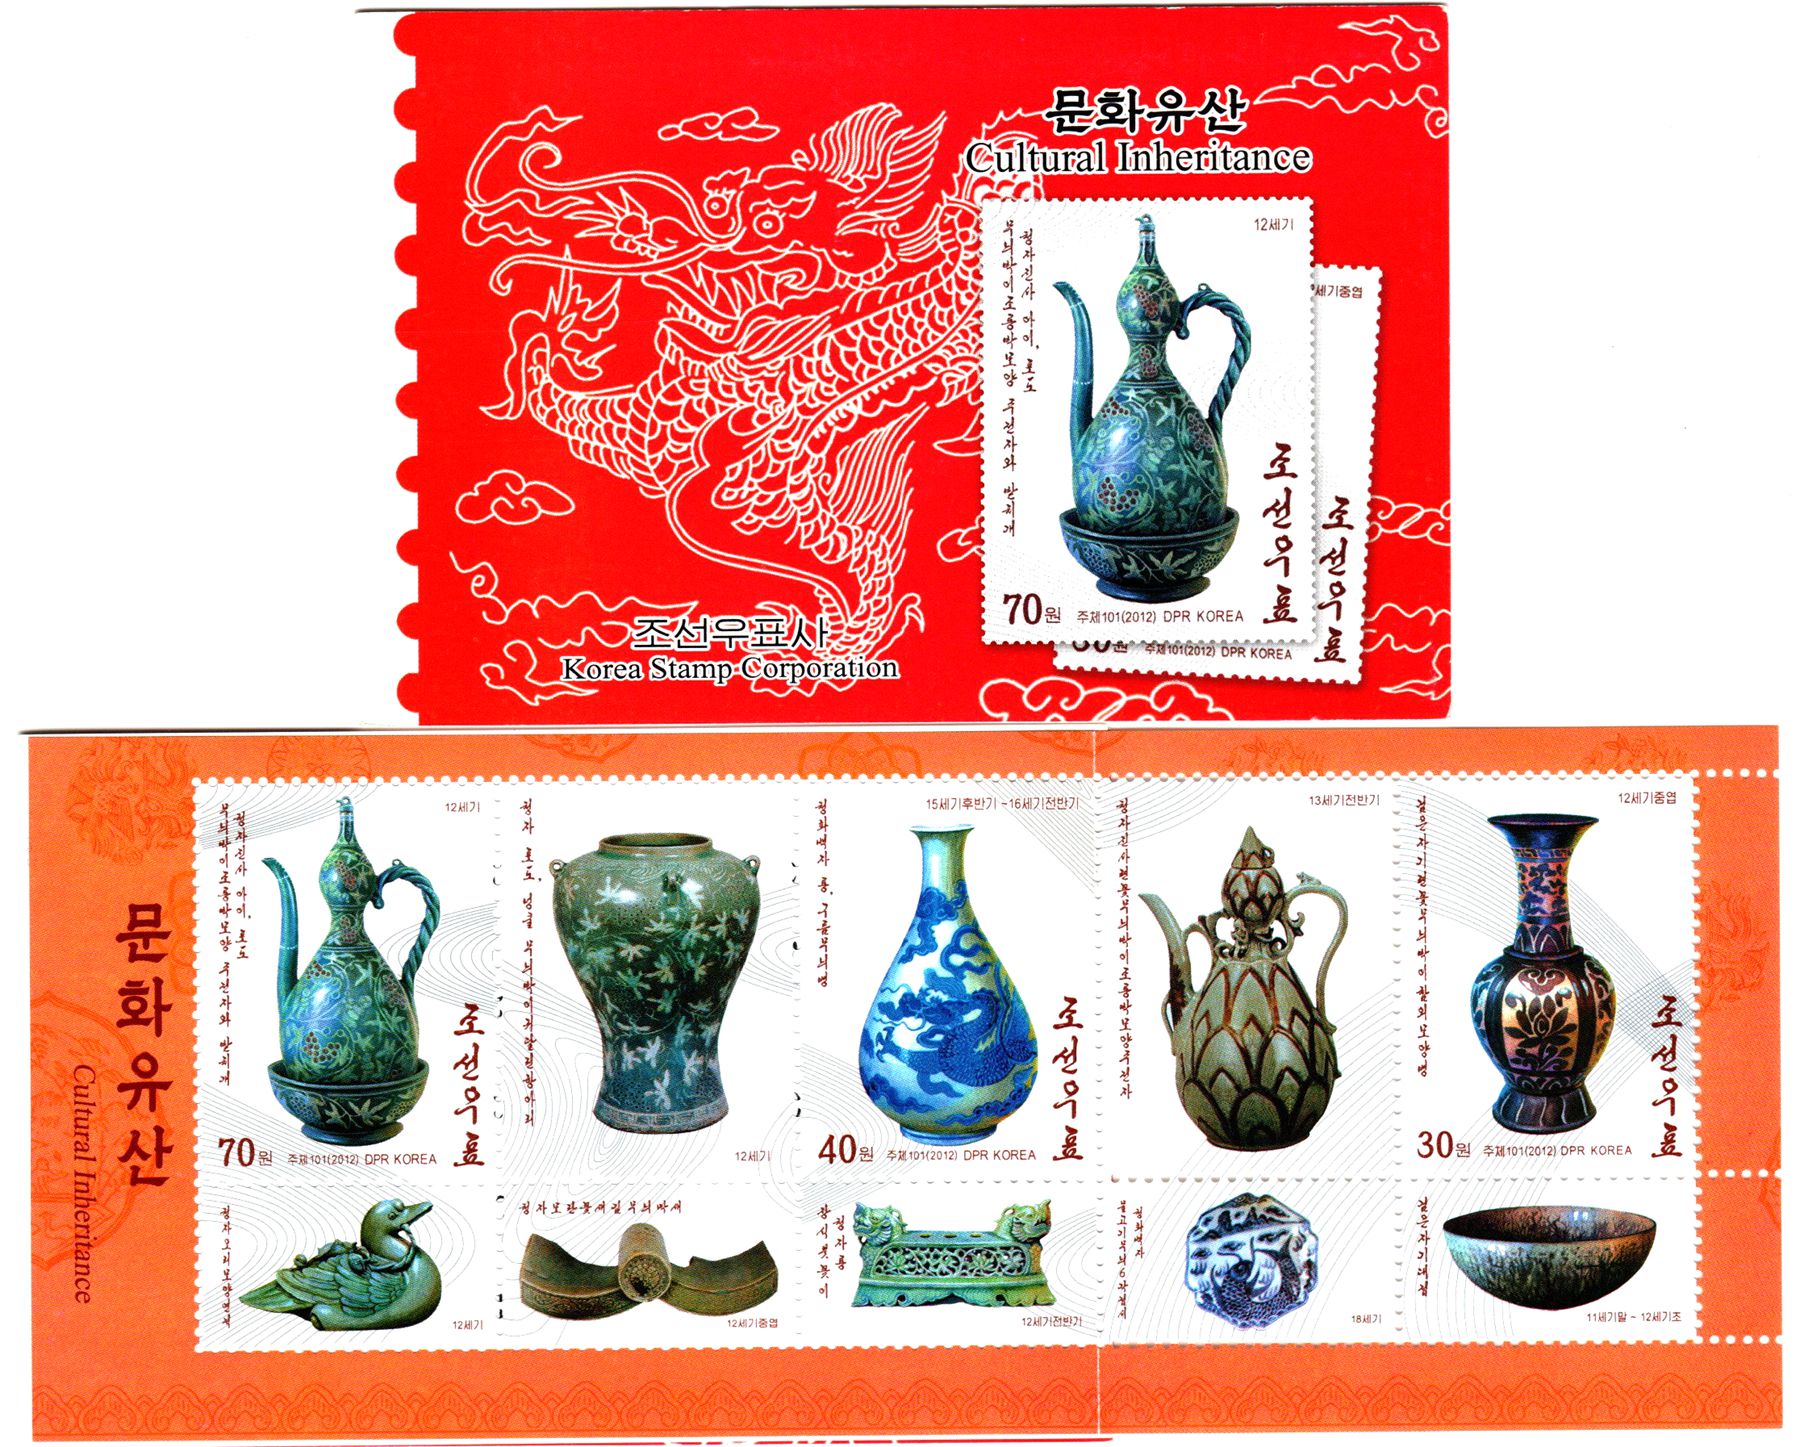 L9076, Korea "Cultural Inheritance (Ceramics)" Stamp Booklet, 2012